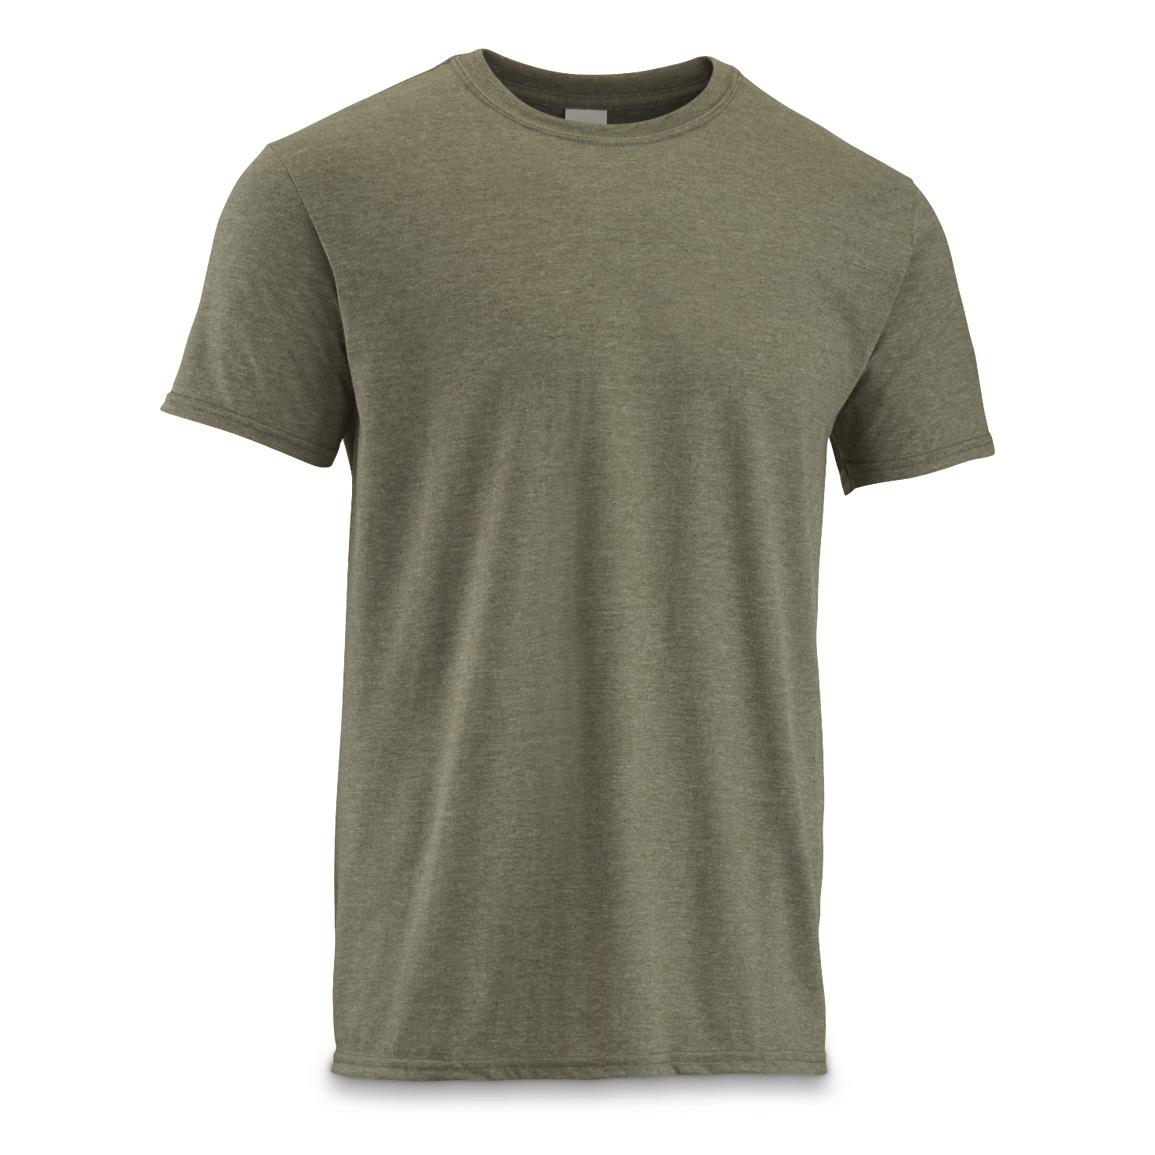 U.S. Military Surplus Combat T-Shirts, 12 Pack, Heather Green, New, Military Heather Green